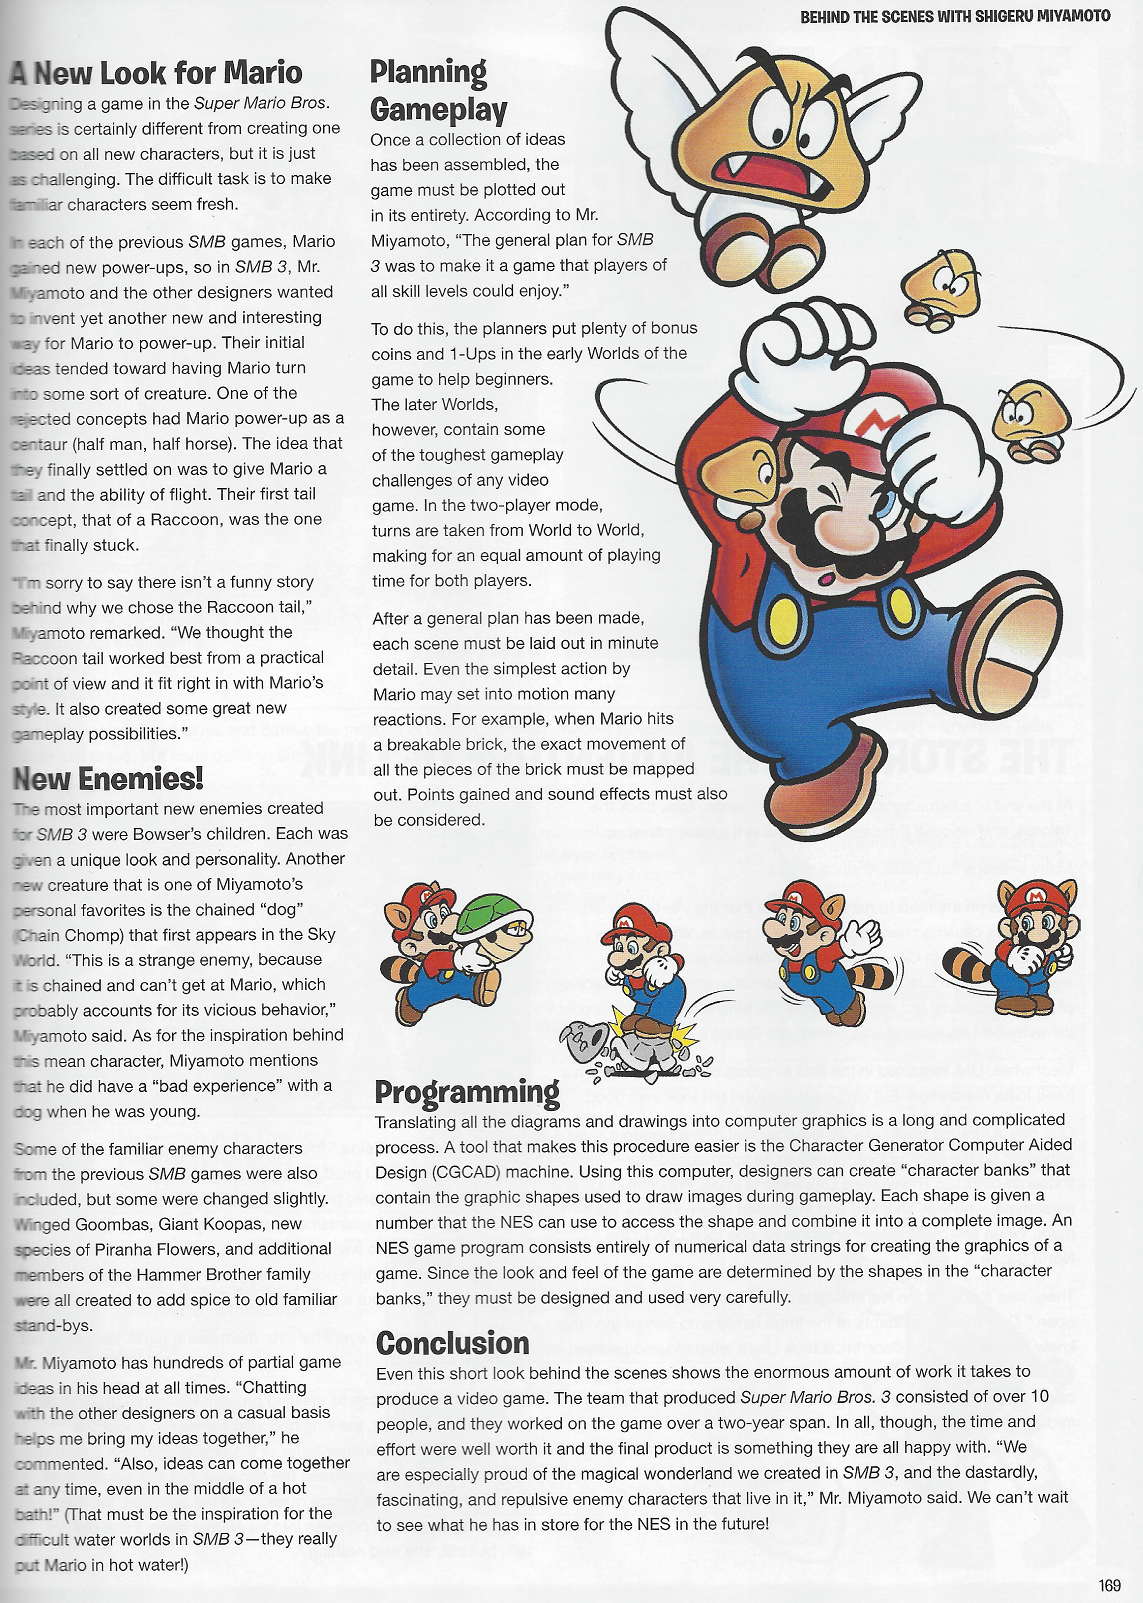 Koopalings - Super Mario Wiki, the Mario encyclopedia